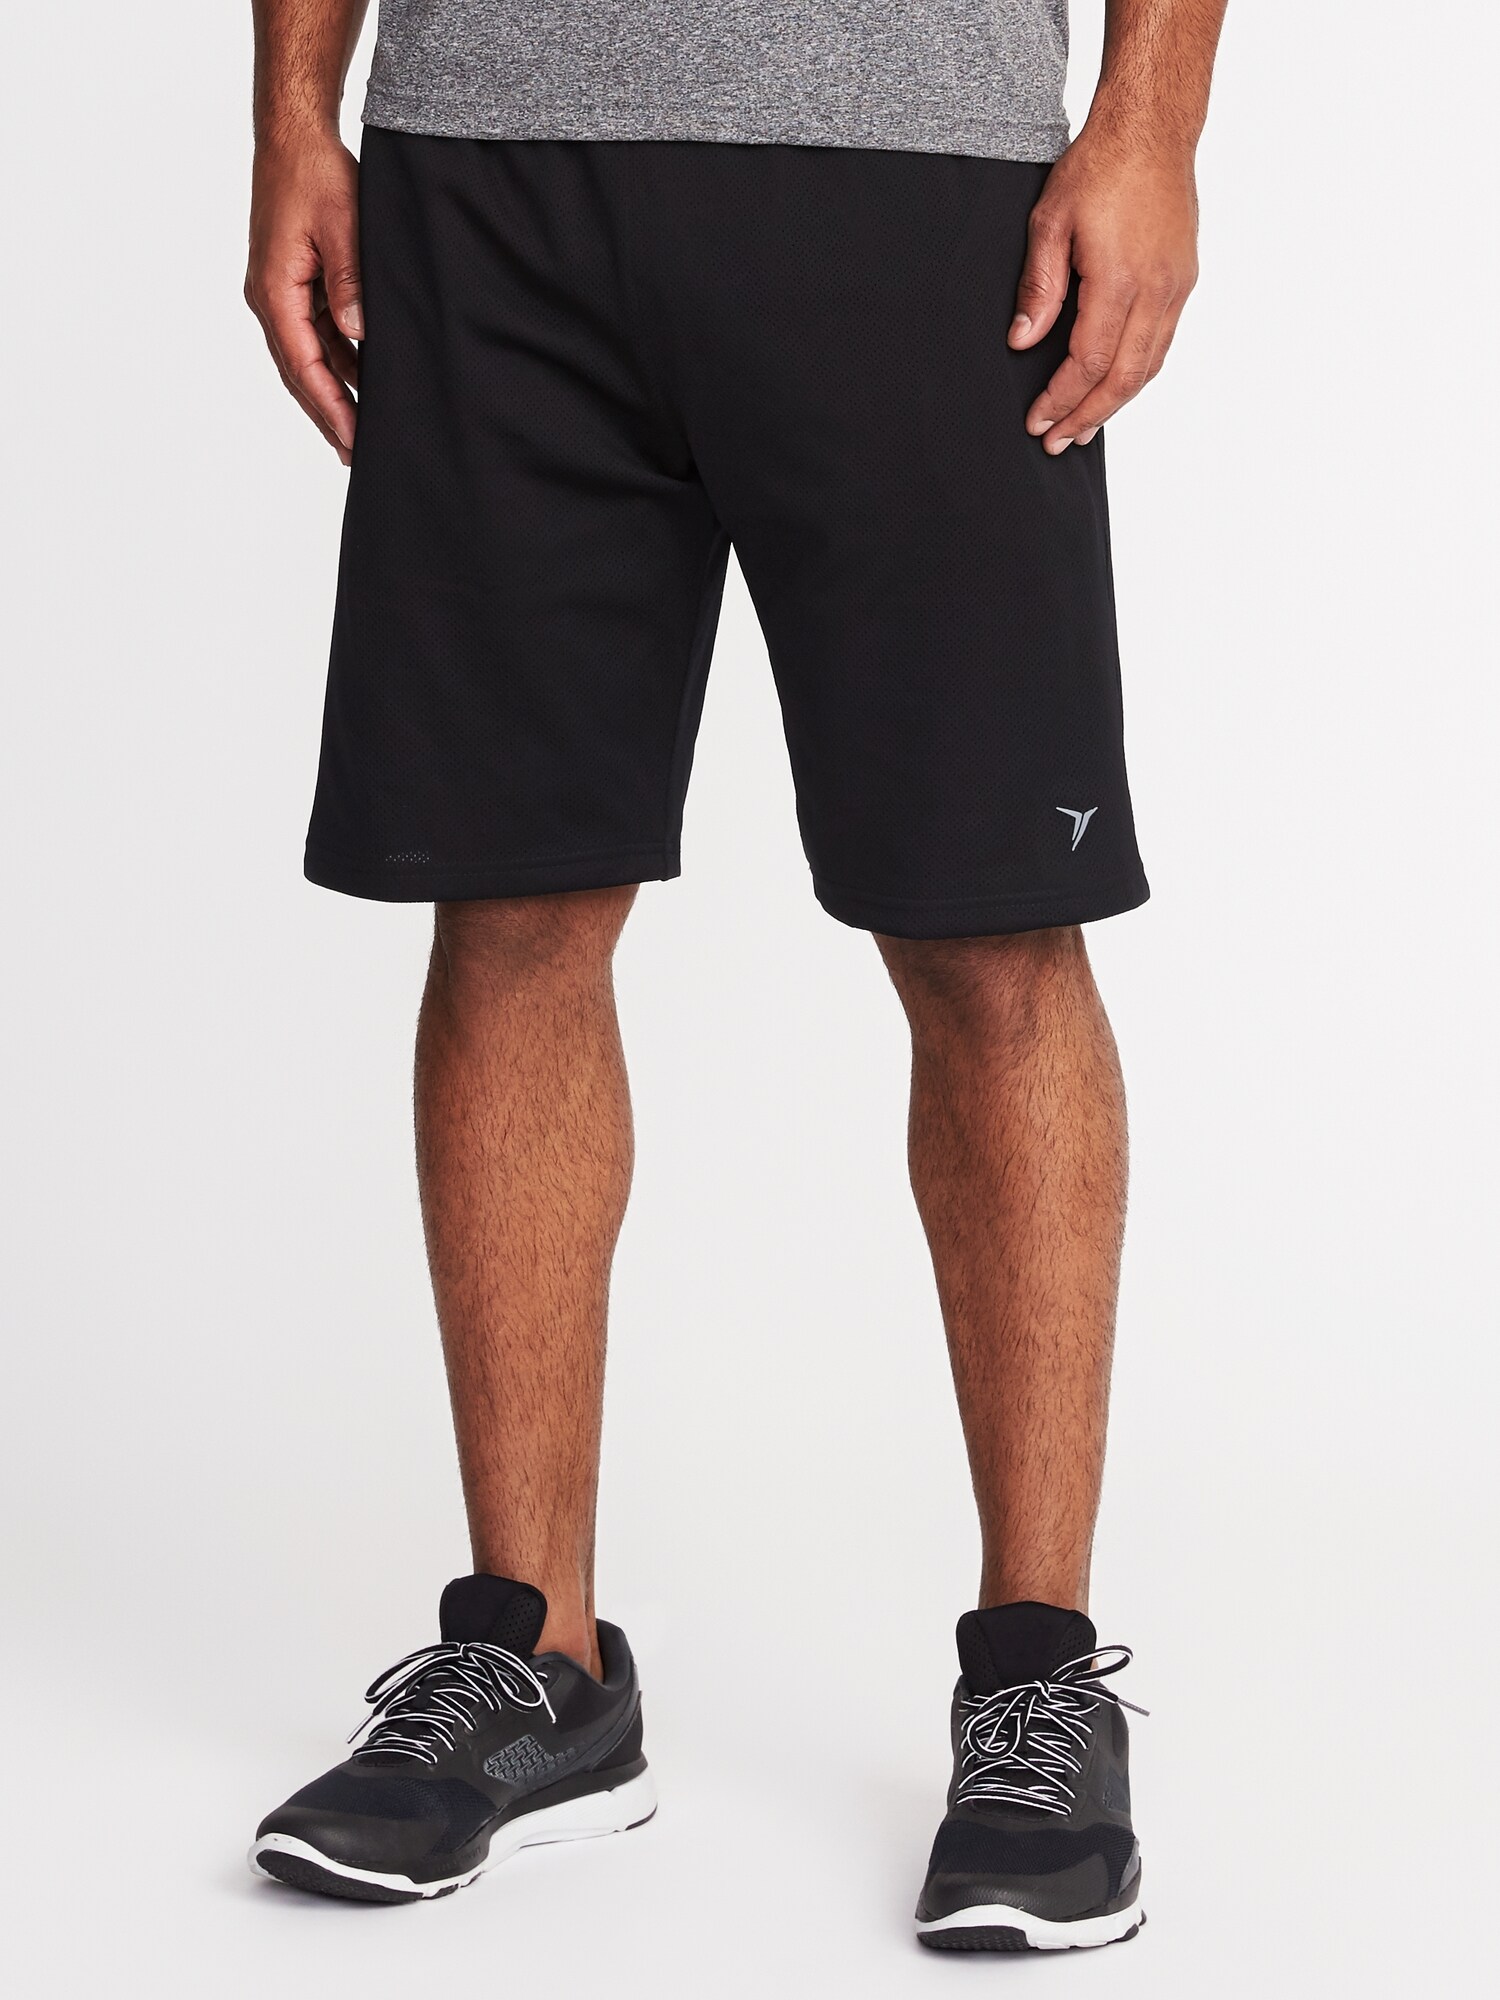 Go-Dry Mesh Shorts for Men - 10 inch inseam | Old Navy